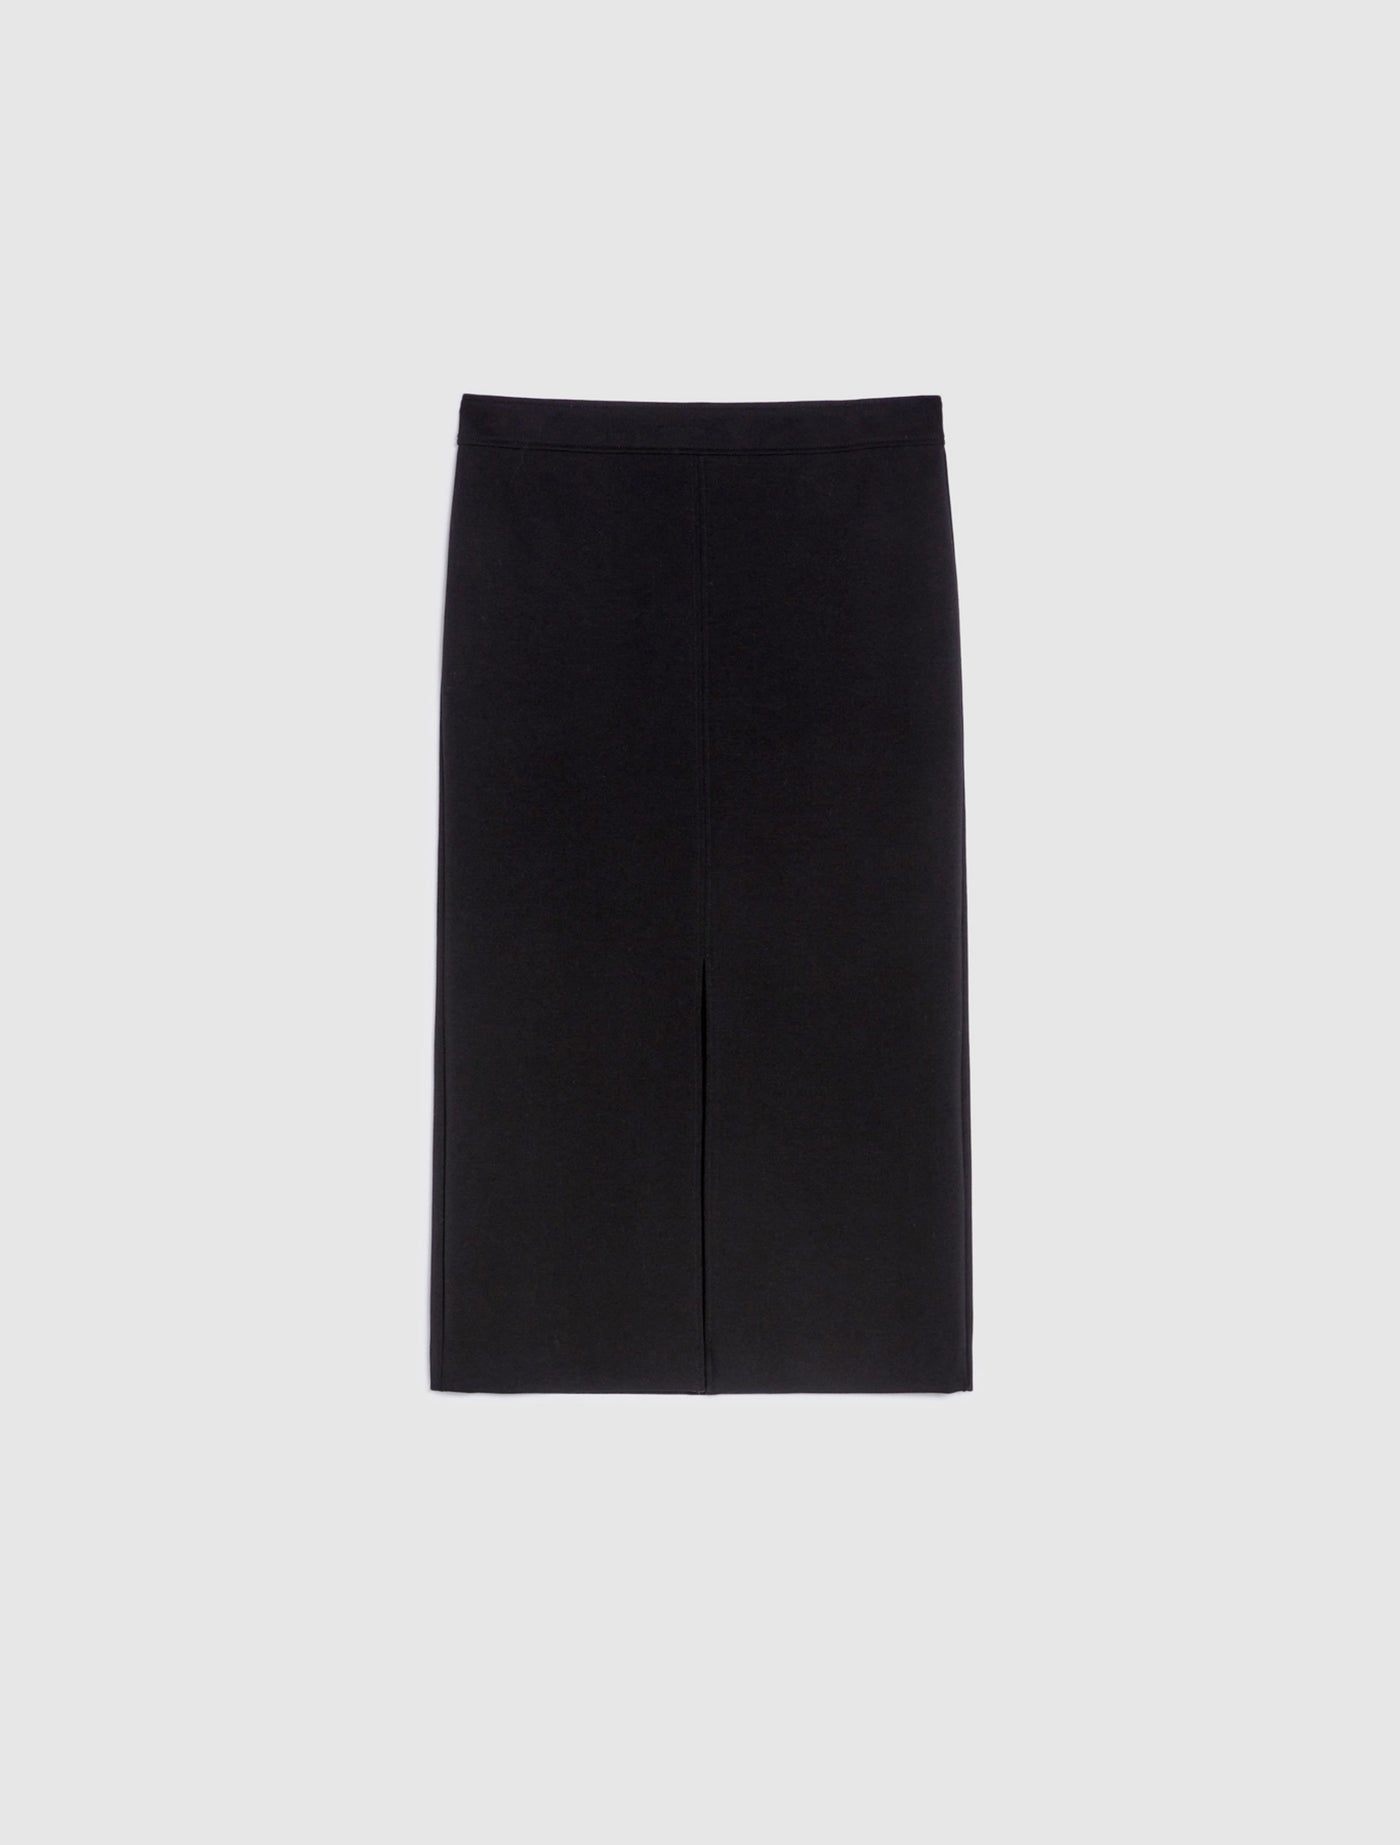 Penny Black Viscose Skirt | Black